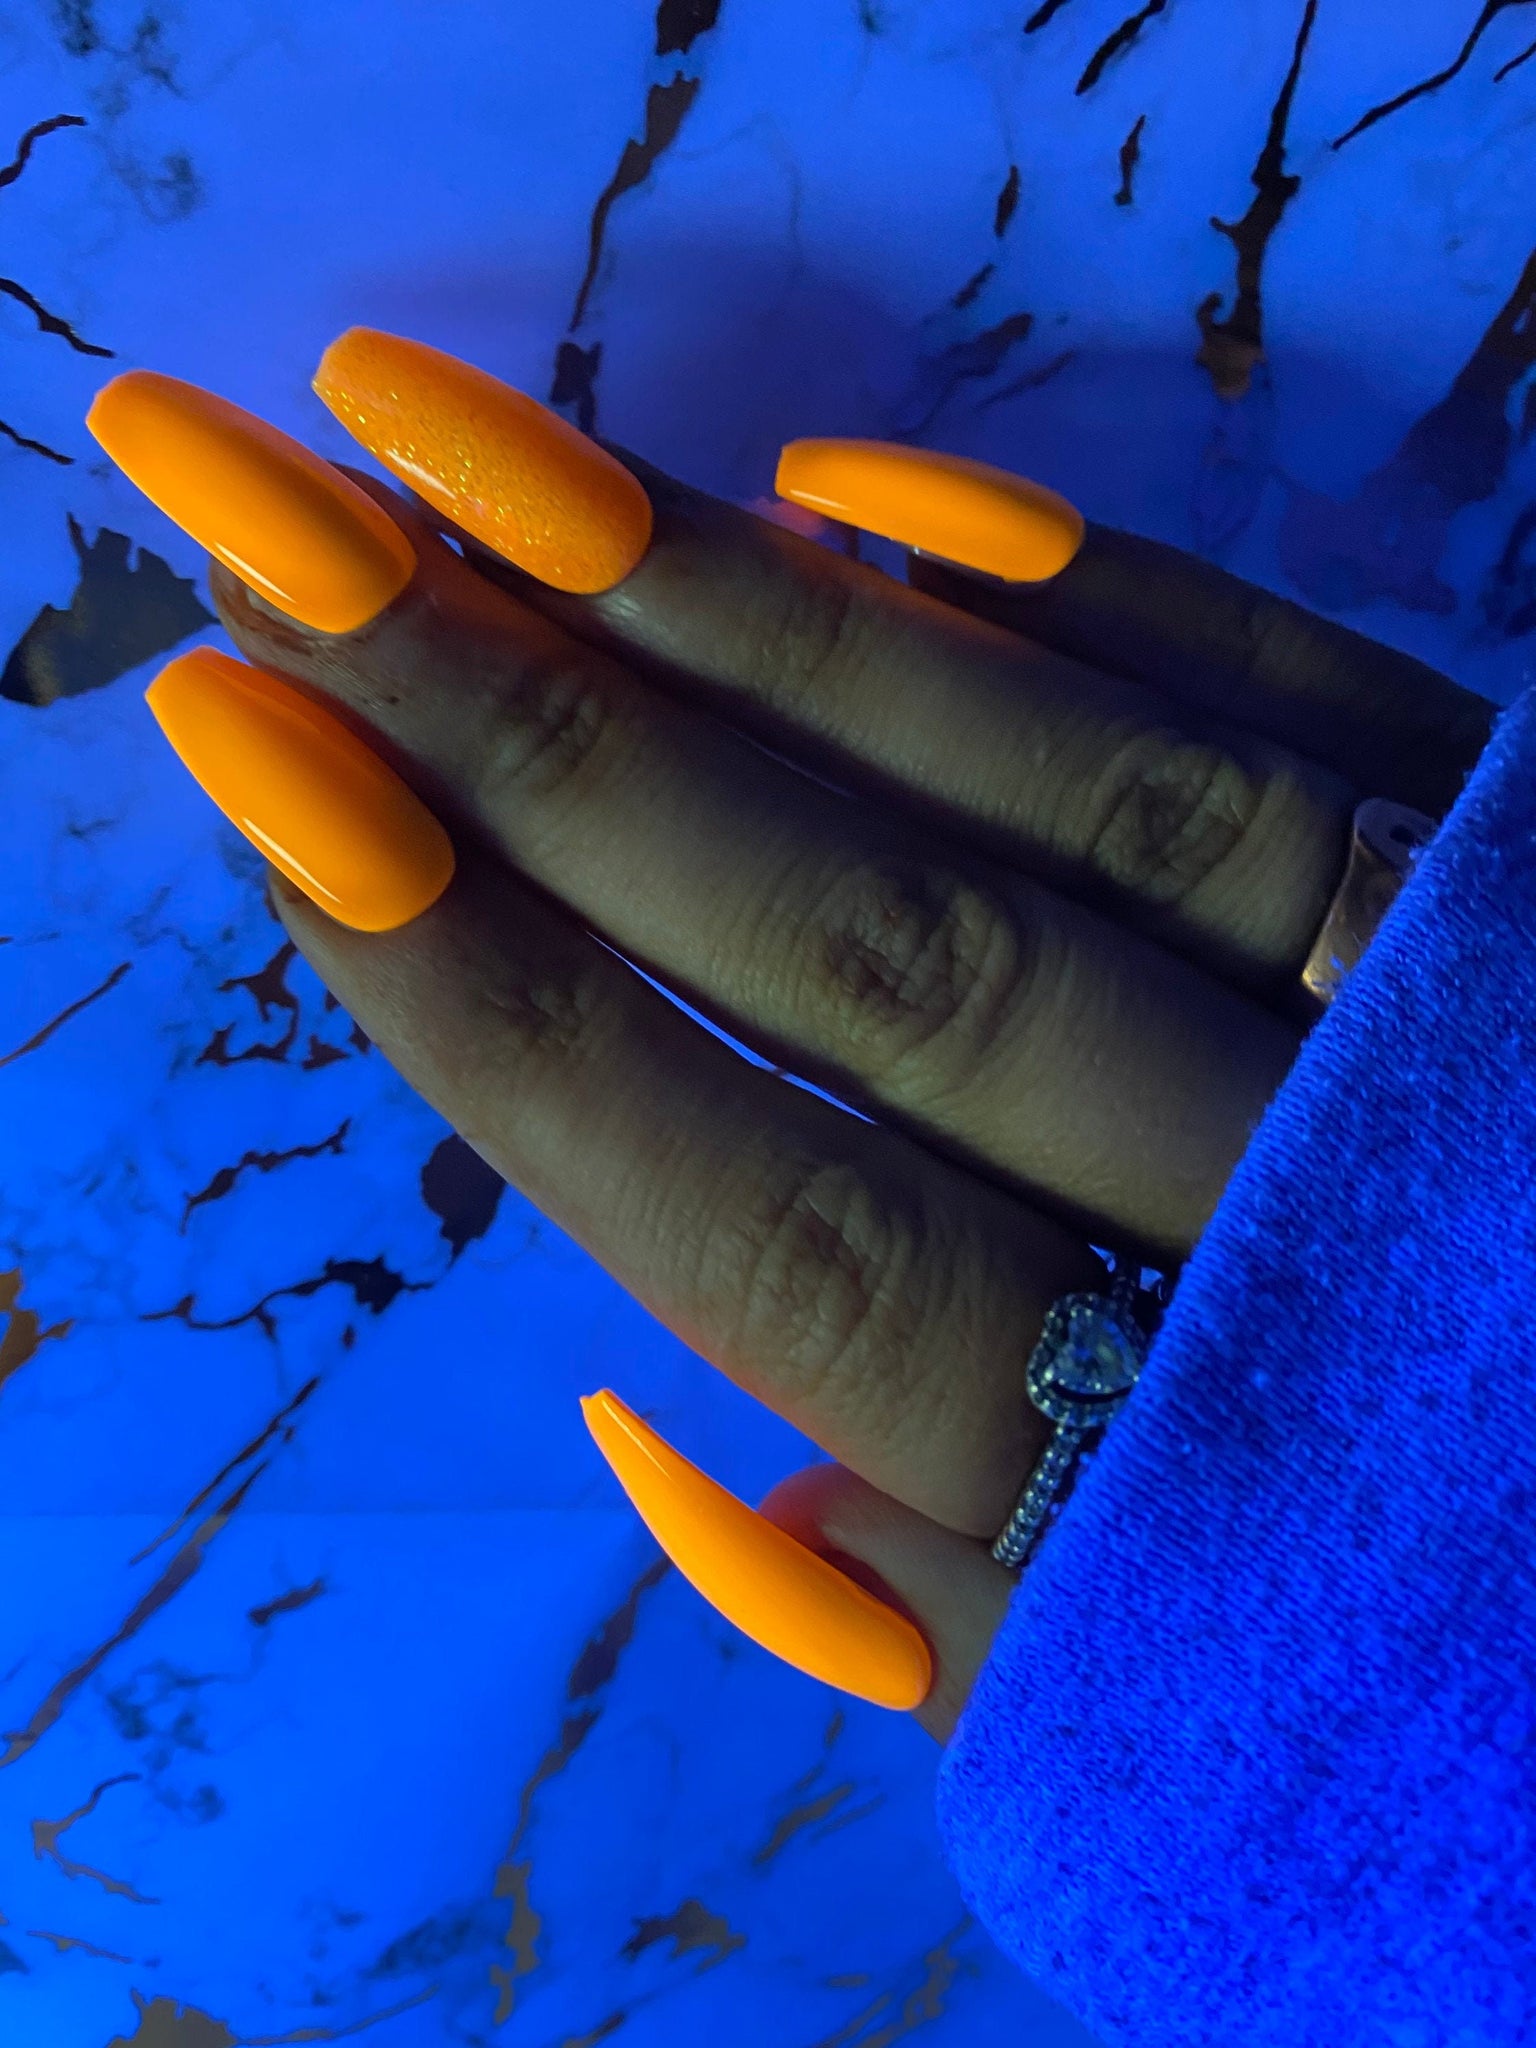 Neon Orange False Nails